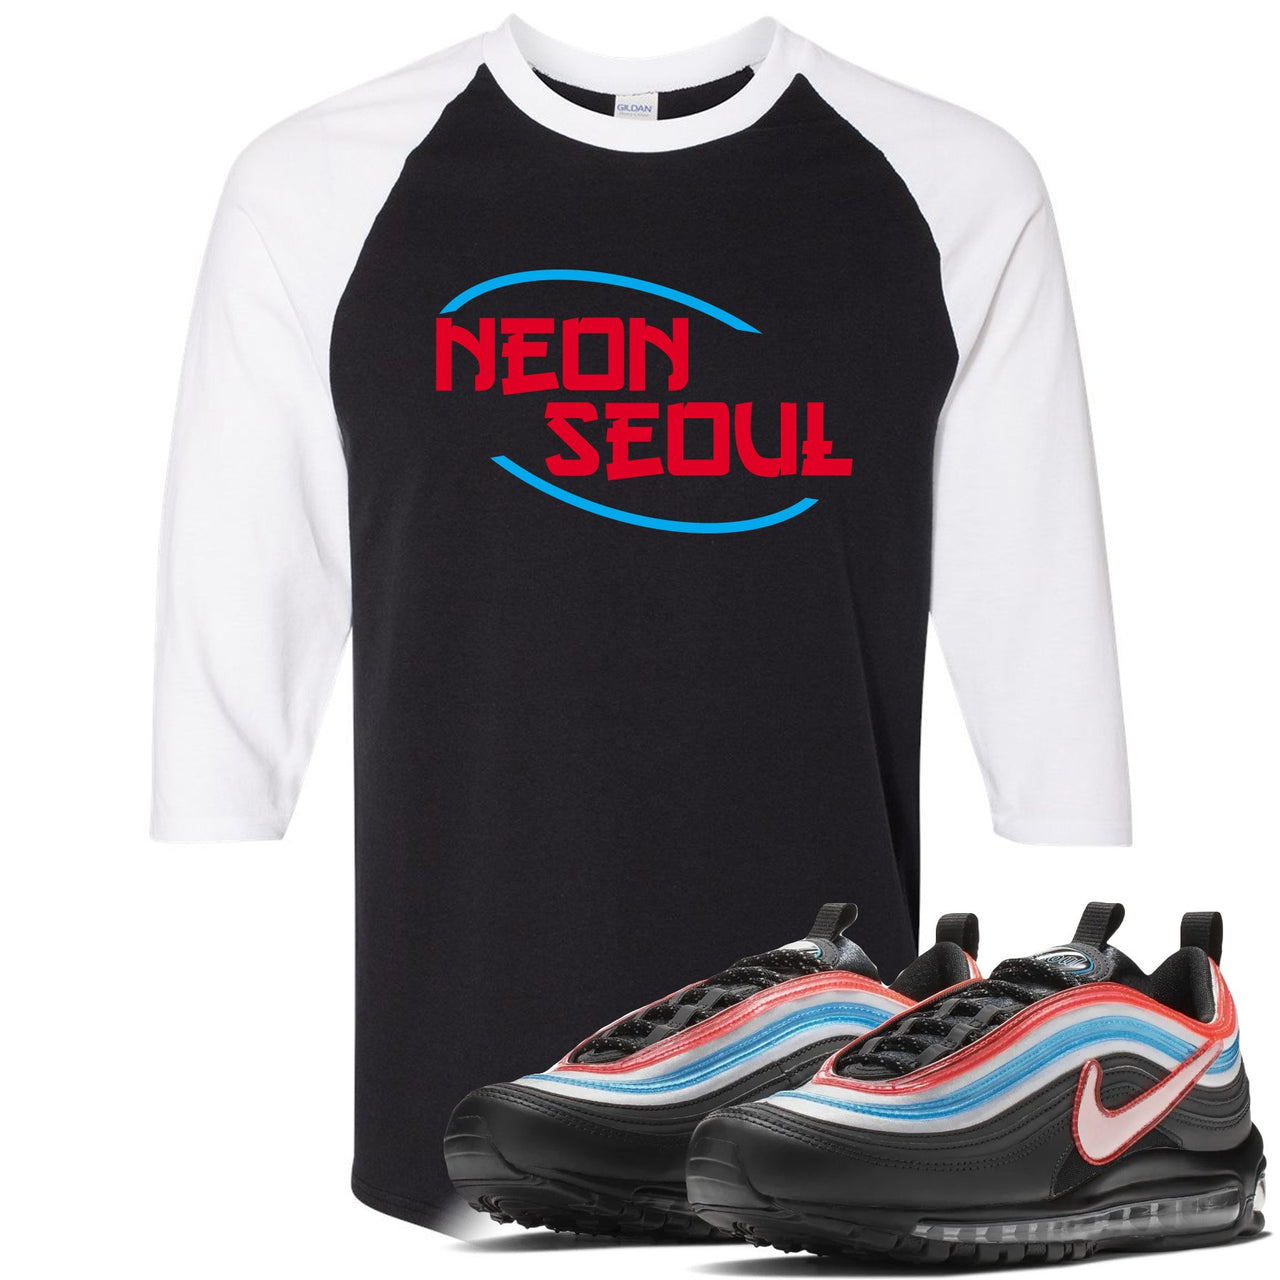 Neon Seoul 97s Raglan T Shirt | Seoul in English, Black and White